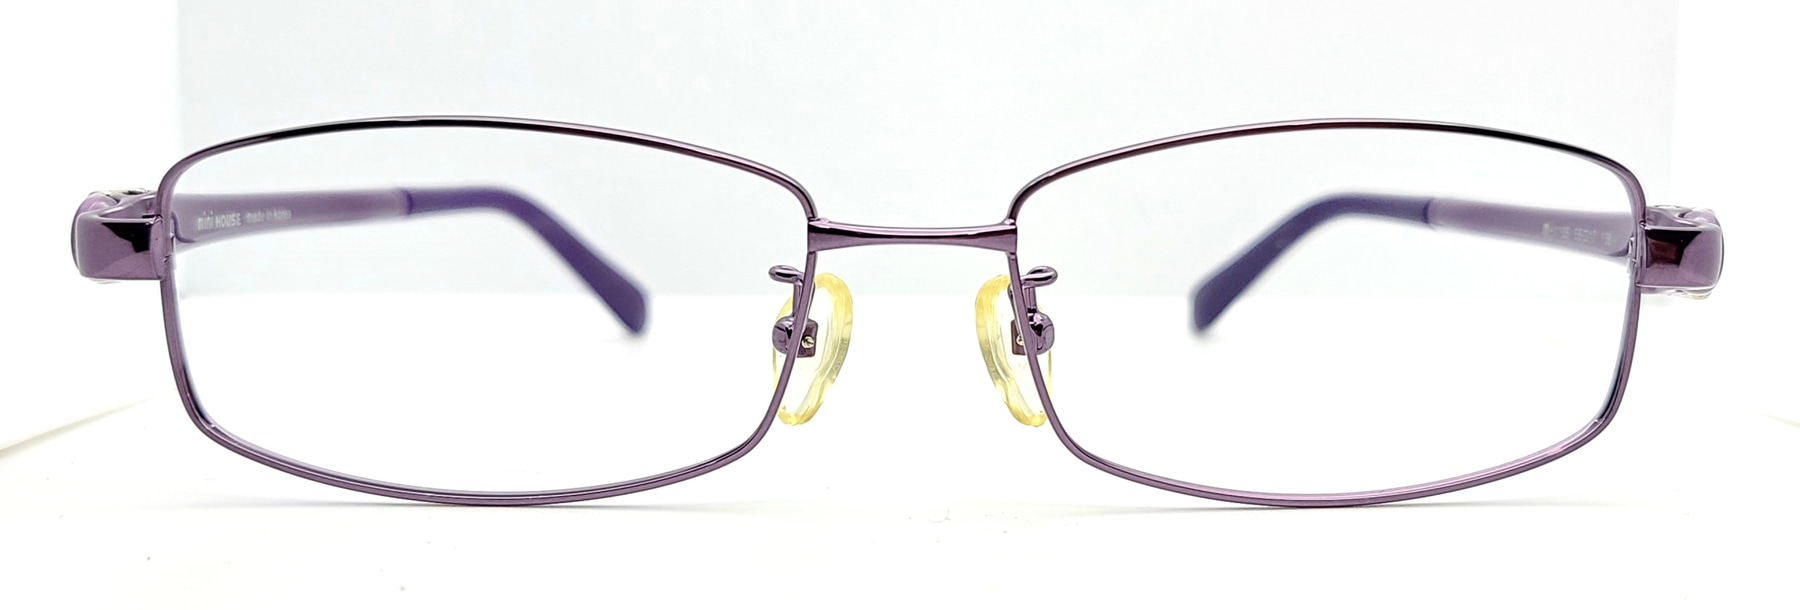 MINIHOUSE M-1105, Korean glasses, sunglasses, eyeglasses, glasses